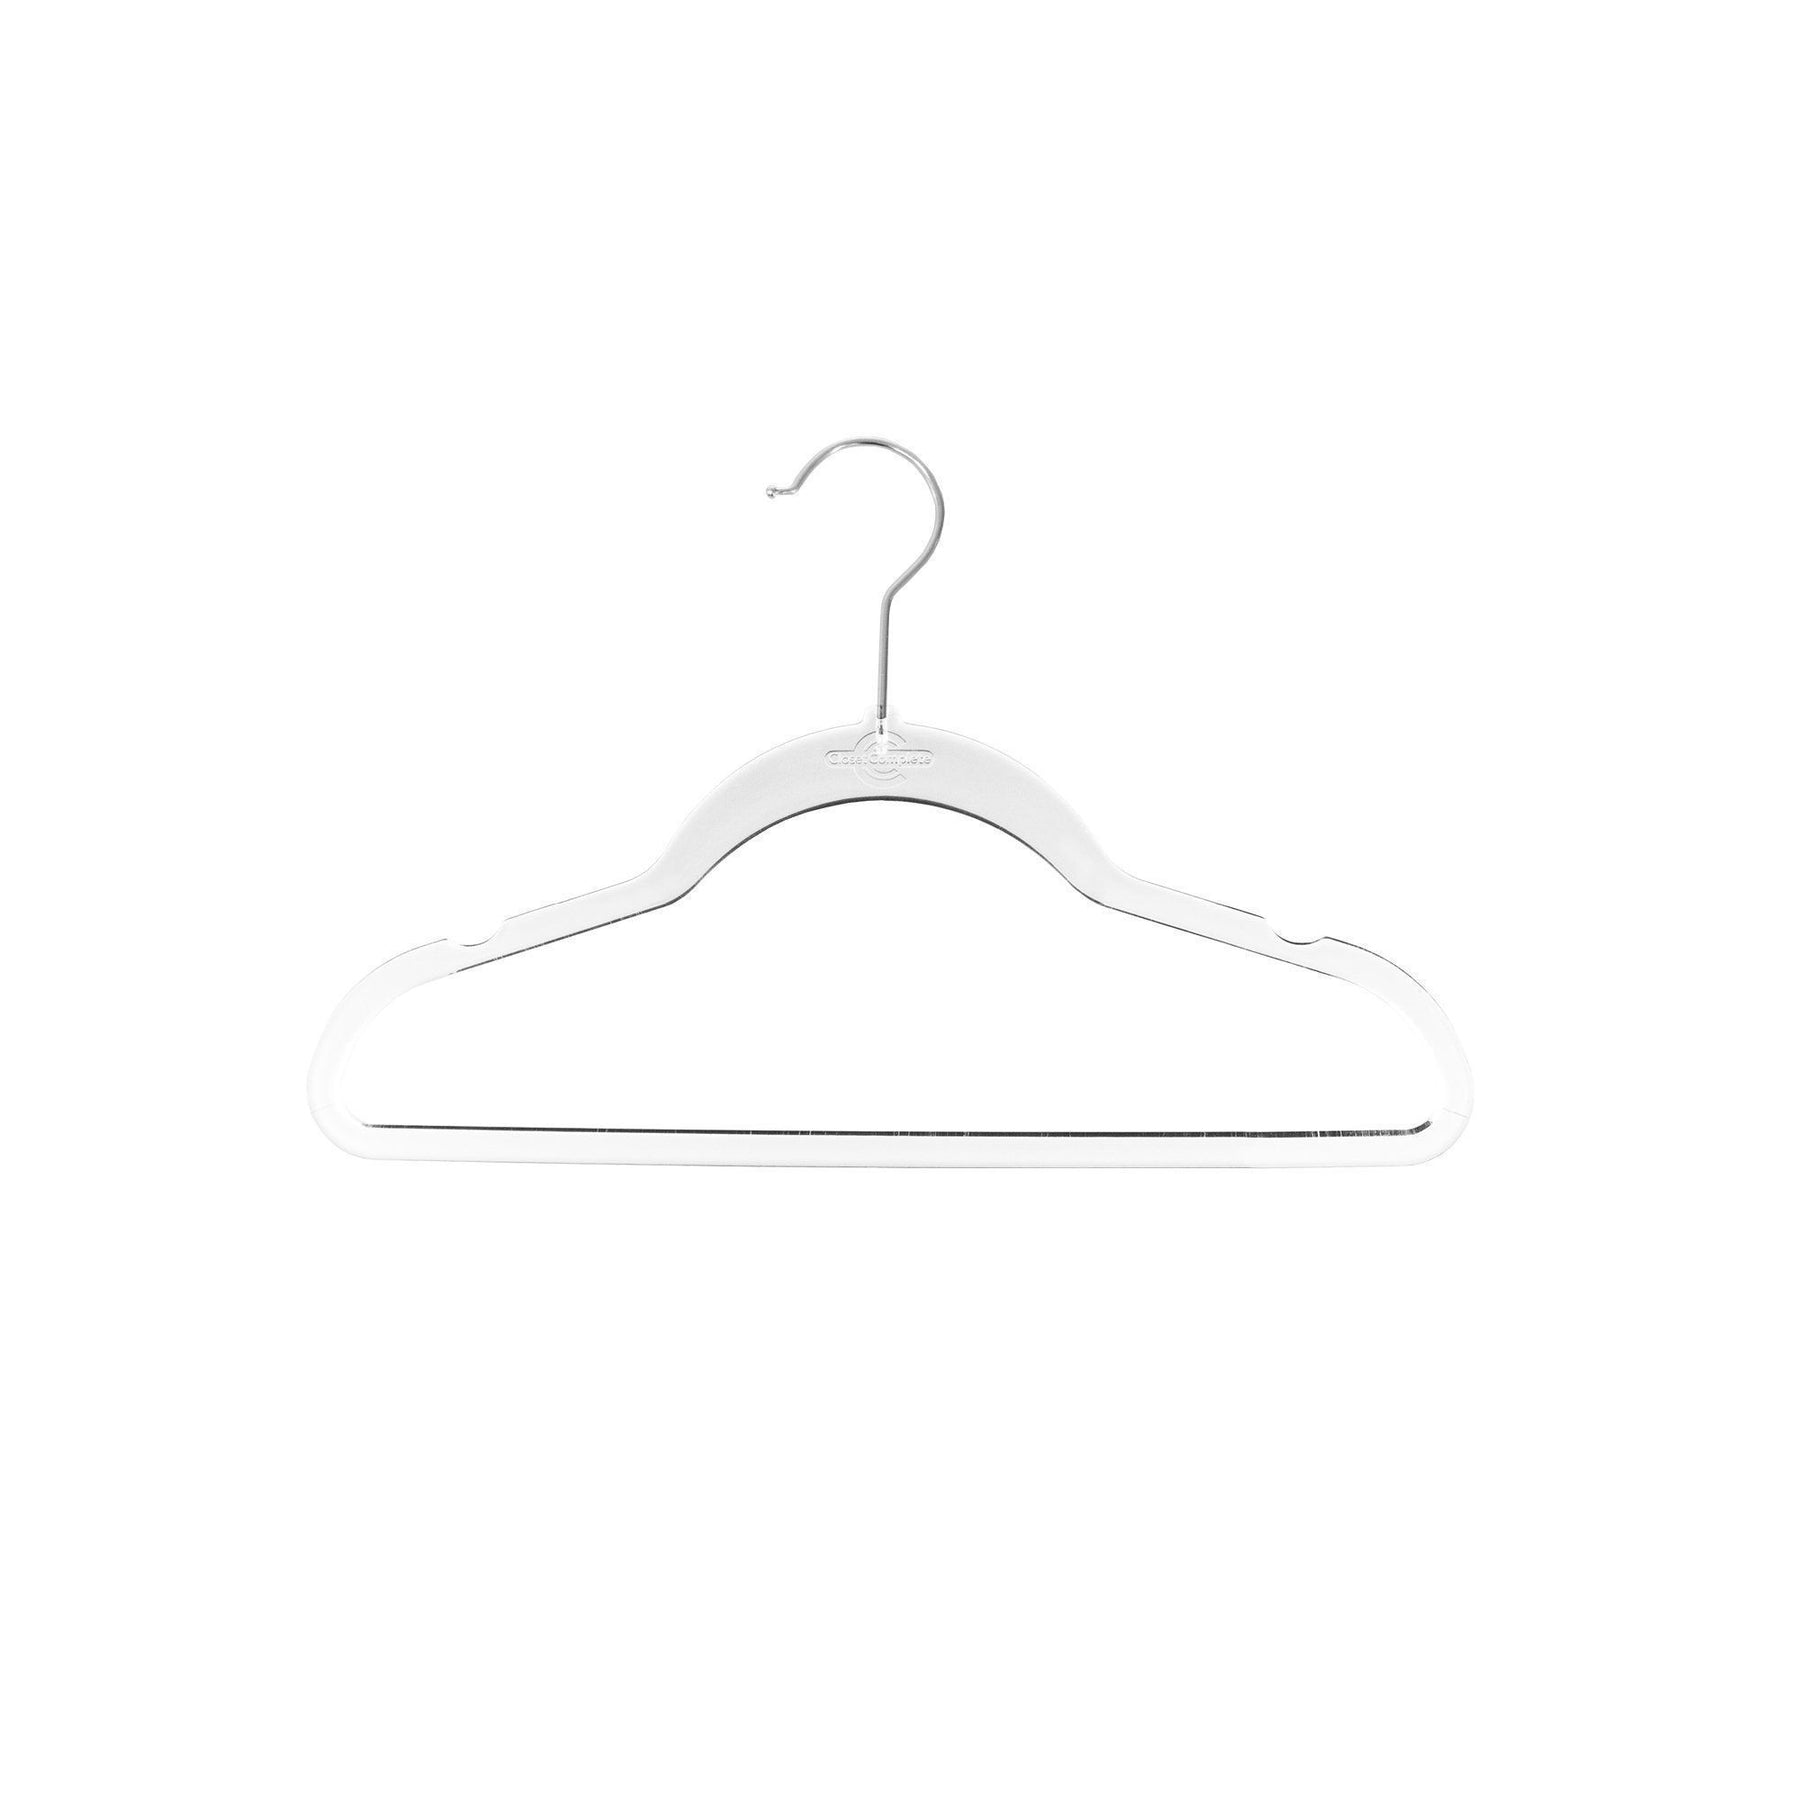 Baby Top Hanger White - 10